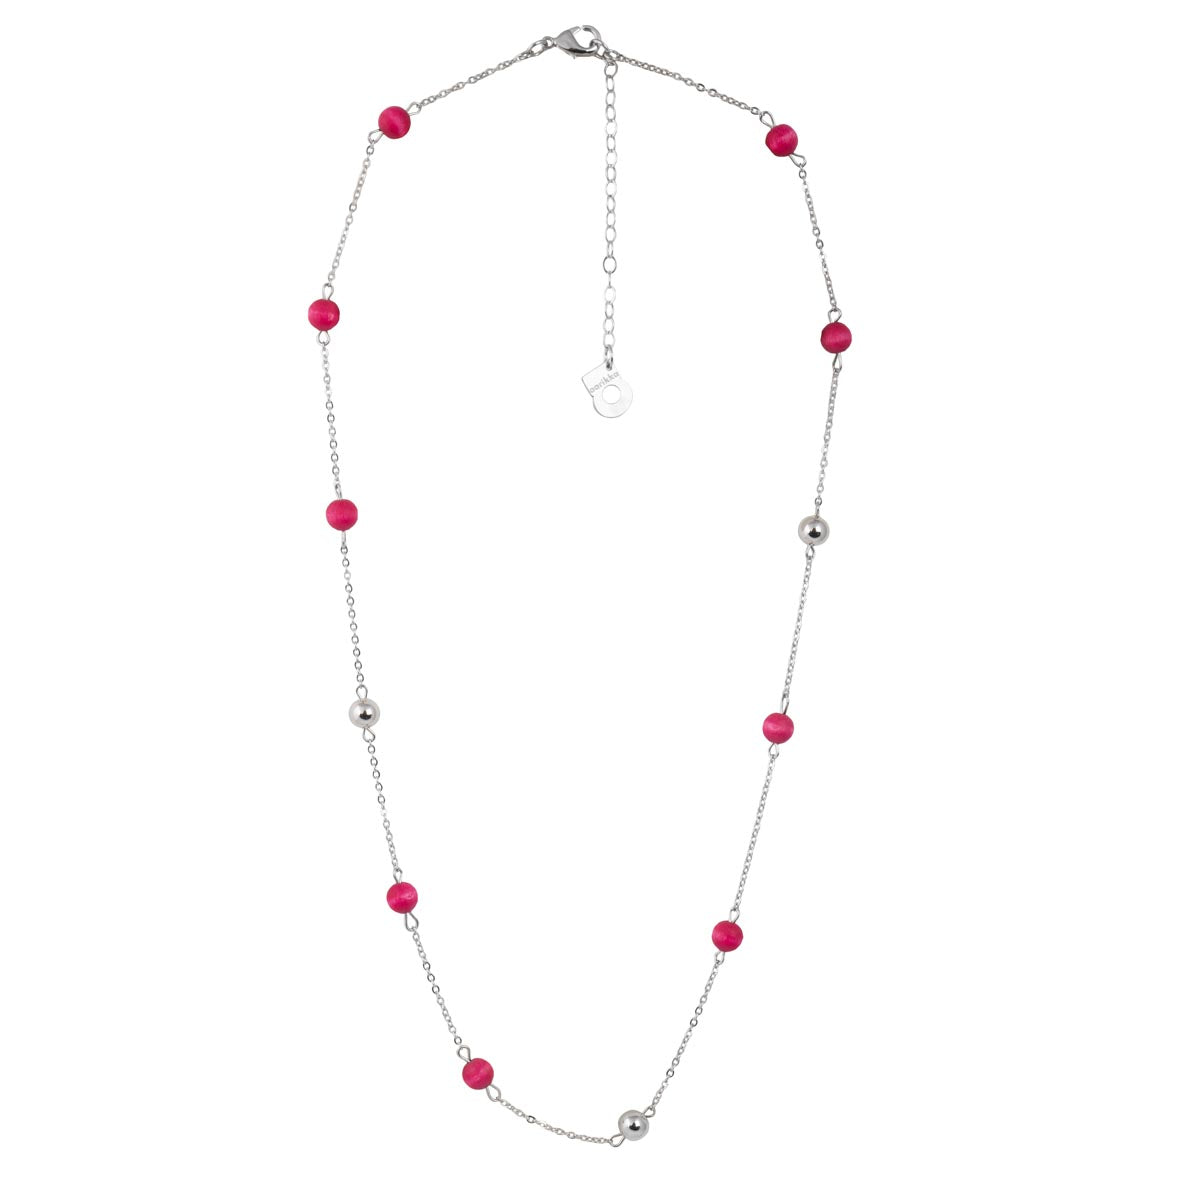 Jade necklace, pink